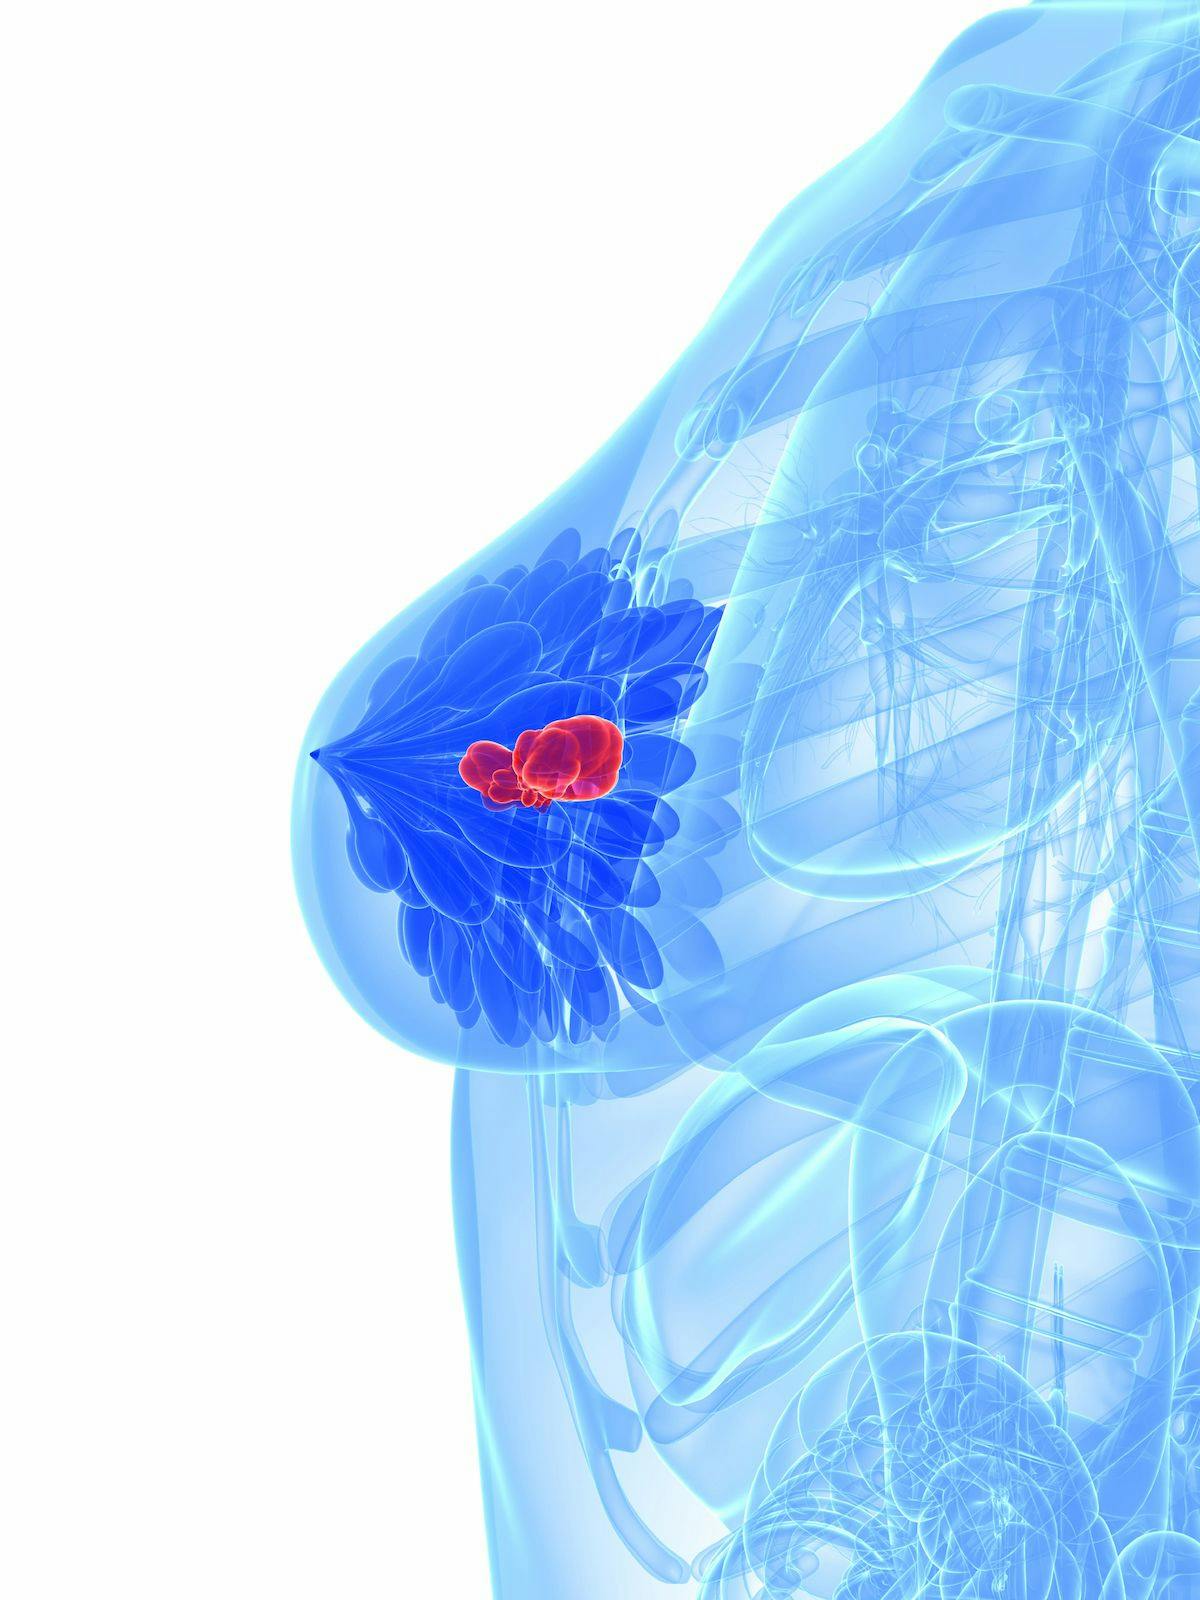 Investigators were able to identify breast cancer immunohistochemistry markers including Ki-67, estrogen receptor, and progesterone receptor status utilizing deep learning–based artificial intelligence algorithms